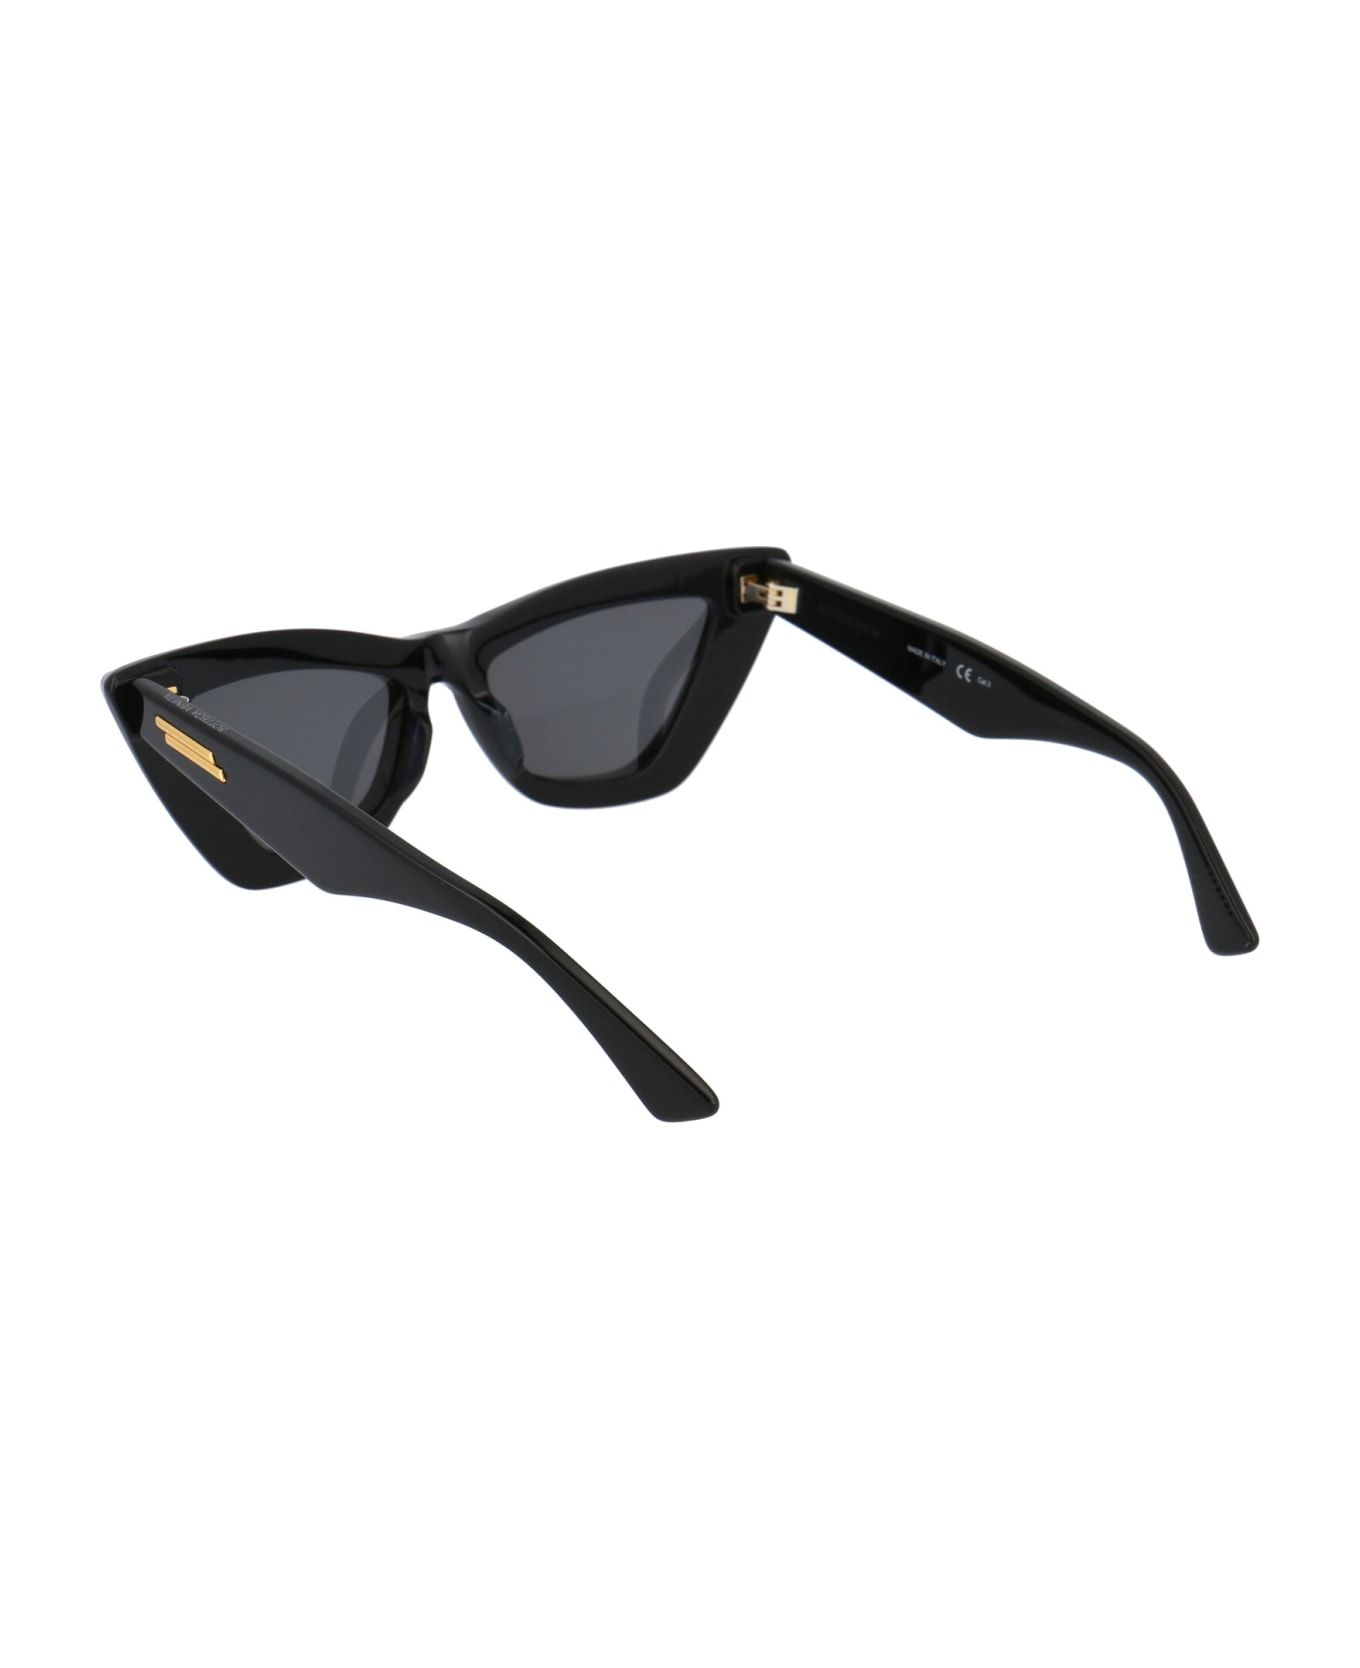 Bottega Veneta Eyewear Bv1101s Sunglasses - 001 BLACK BLACK GREY